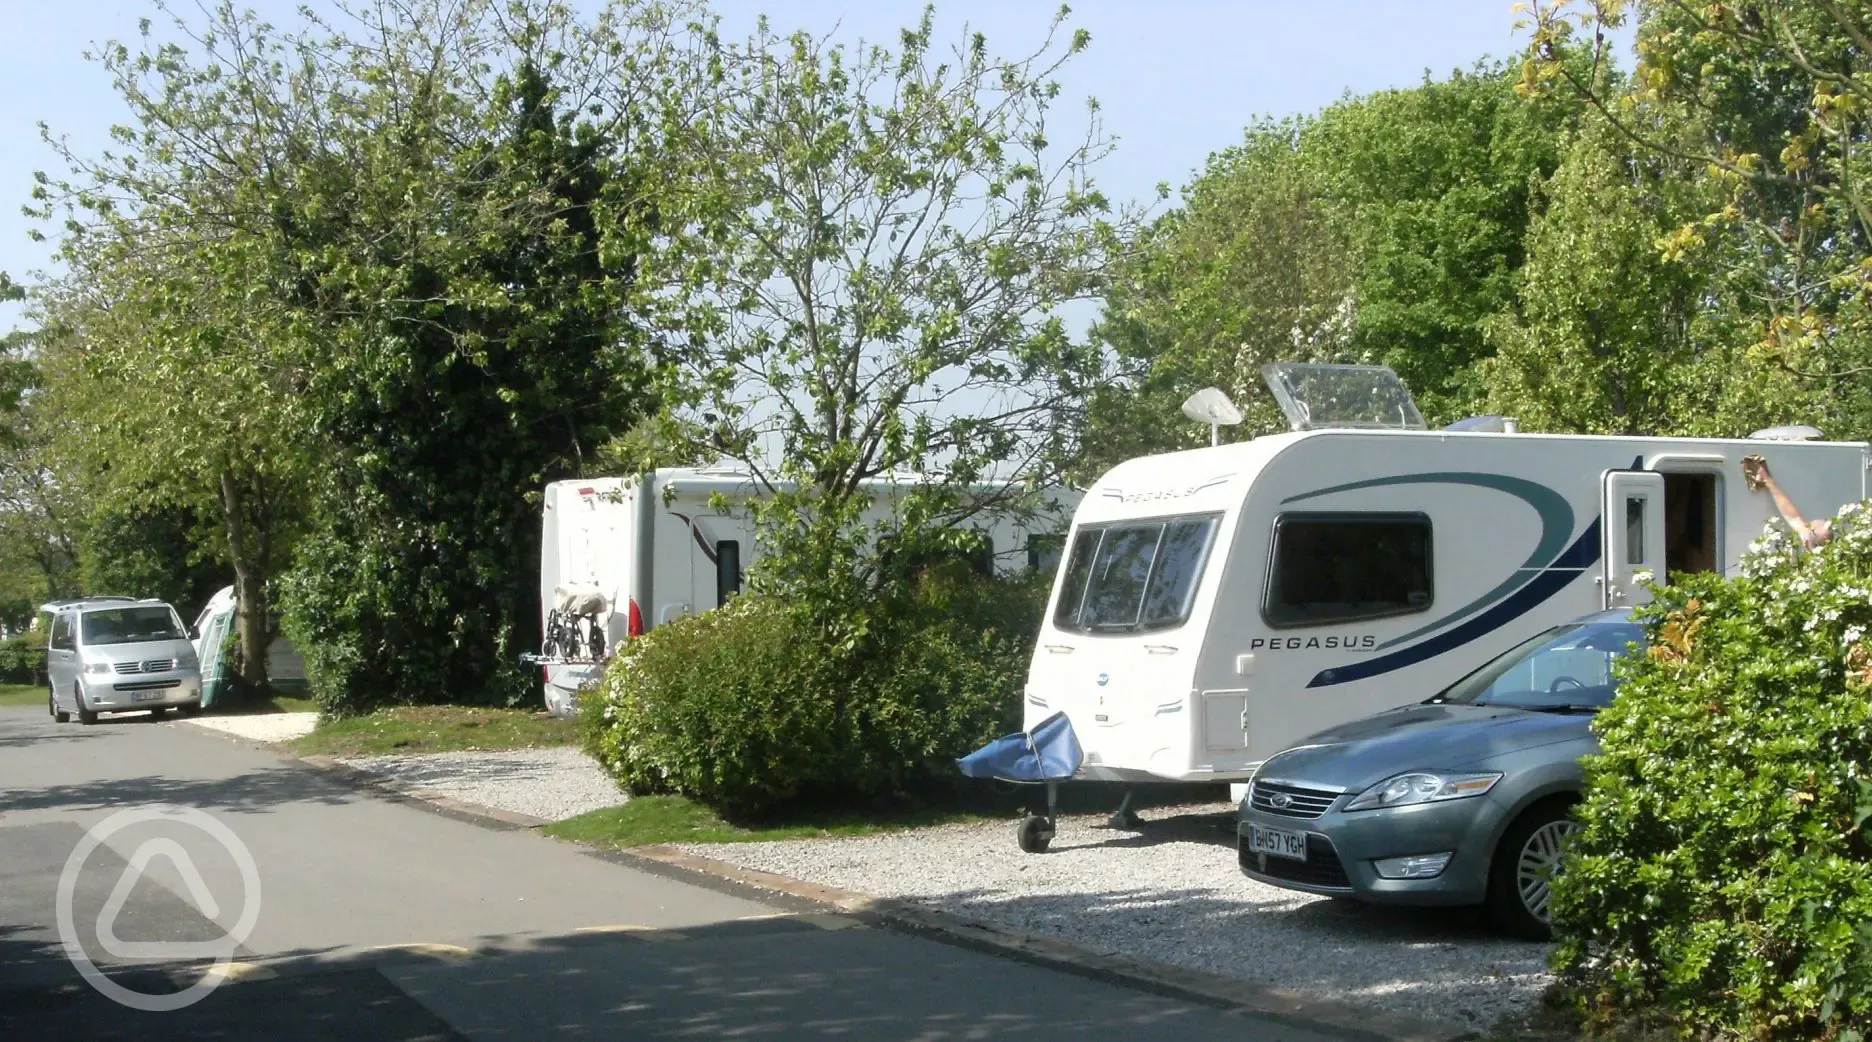 Caravans on site